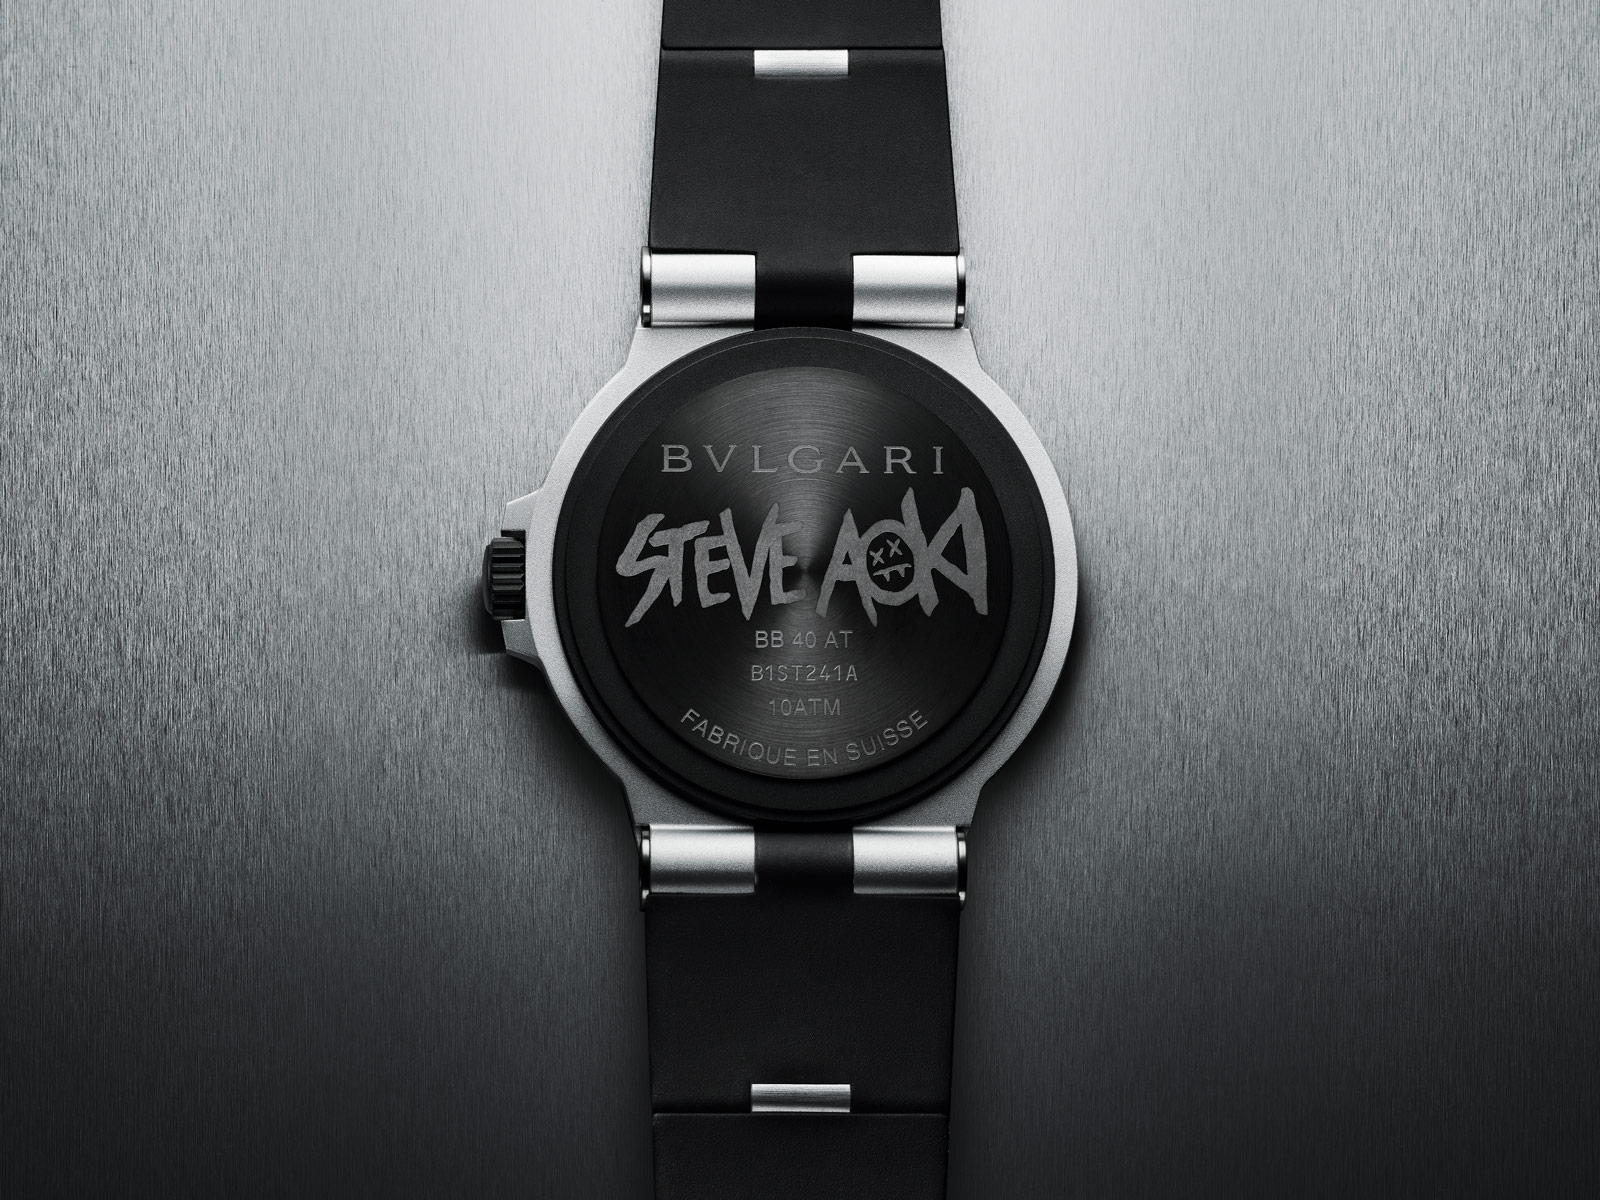 mặt lưng đồng hồ bvlgari aluminium steve aoki mới